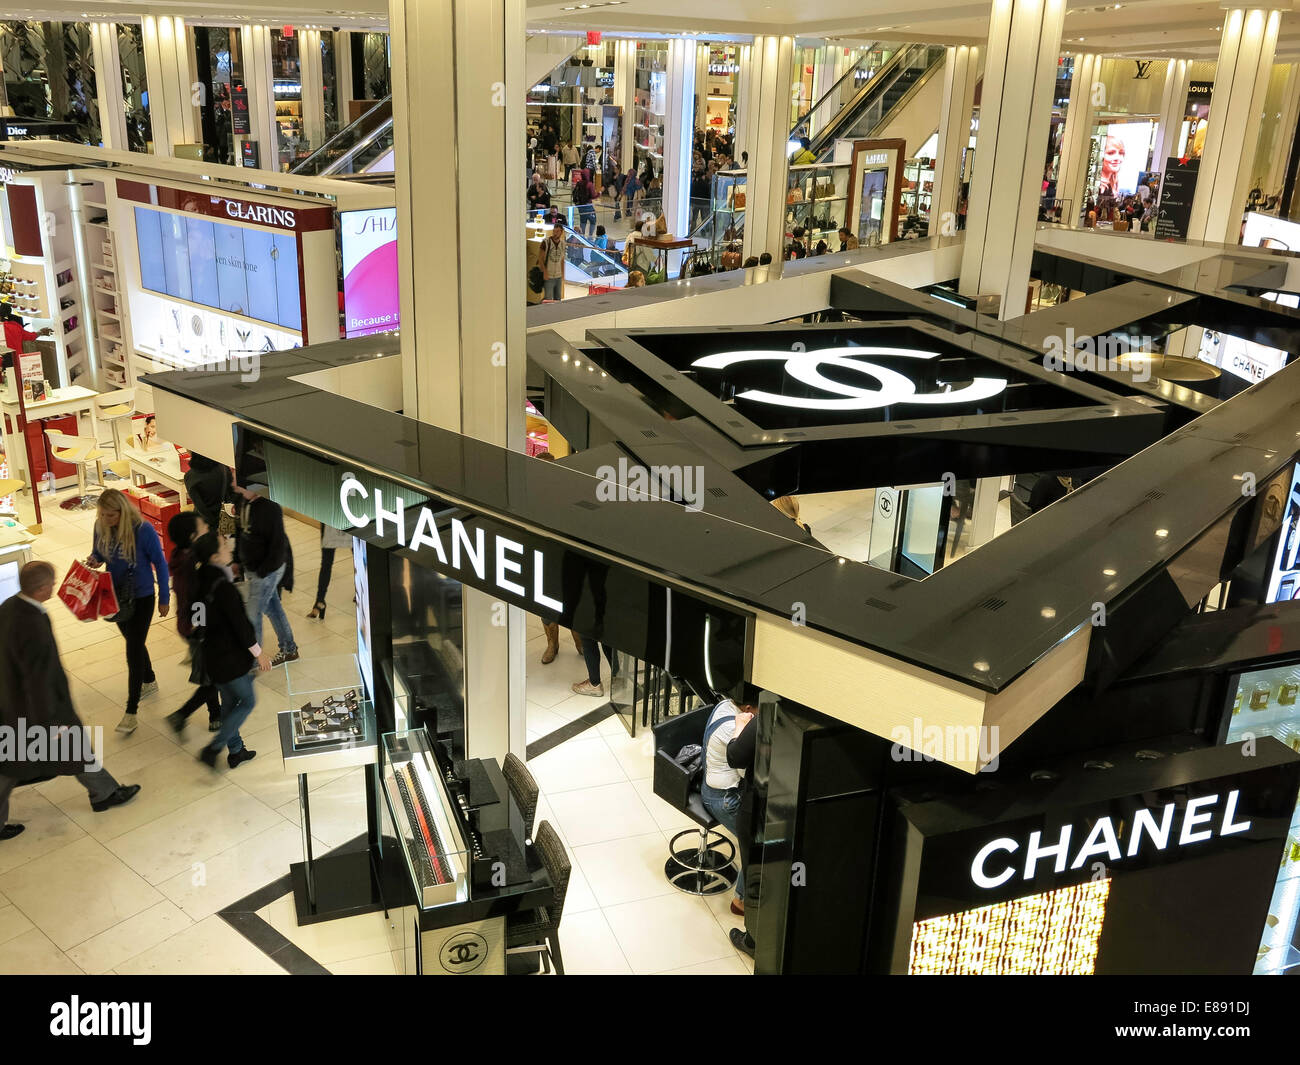 Chanel Kiosk, Main Floor, Macy's Department Store, Herald Square, NYC Stock  Photo - Alamy